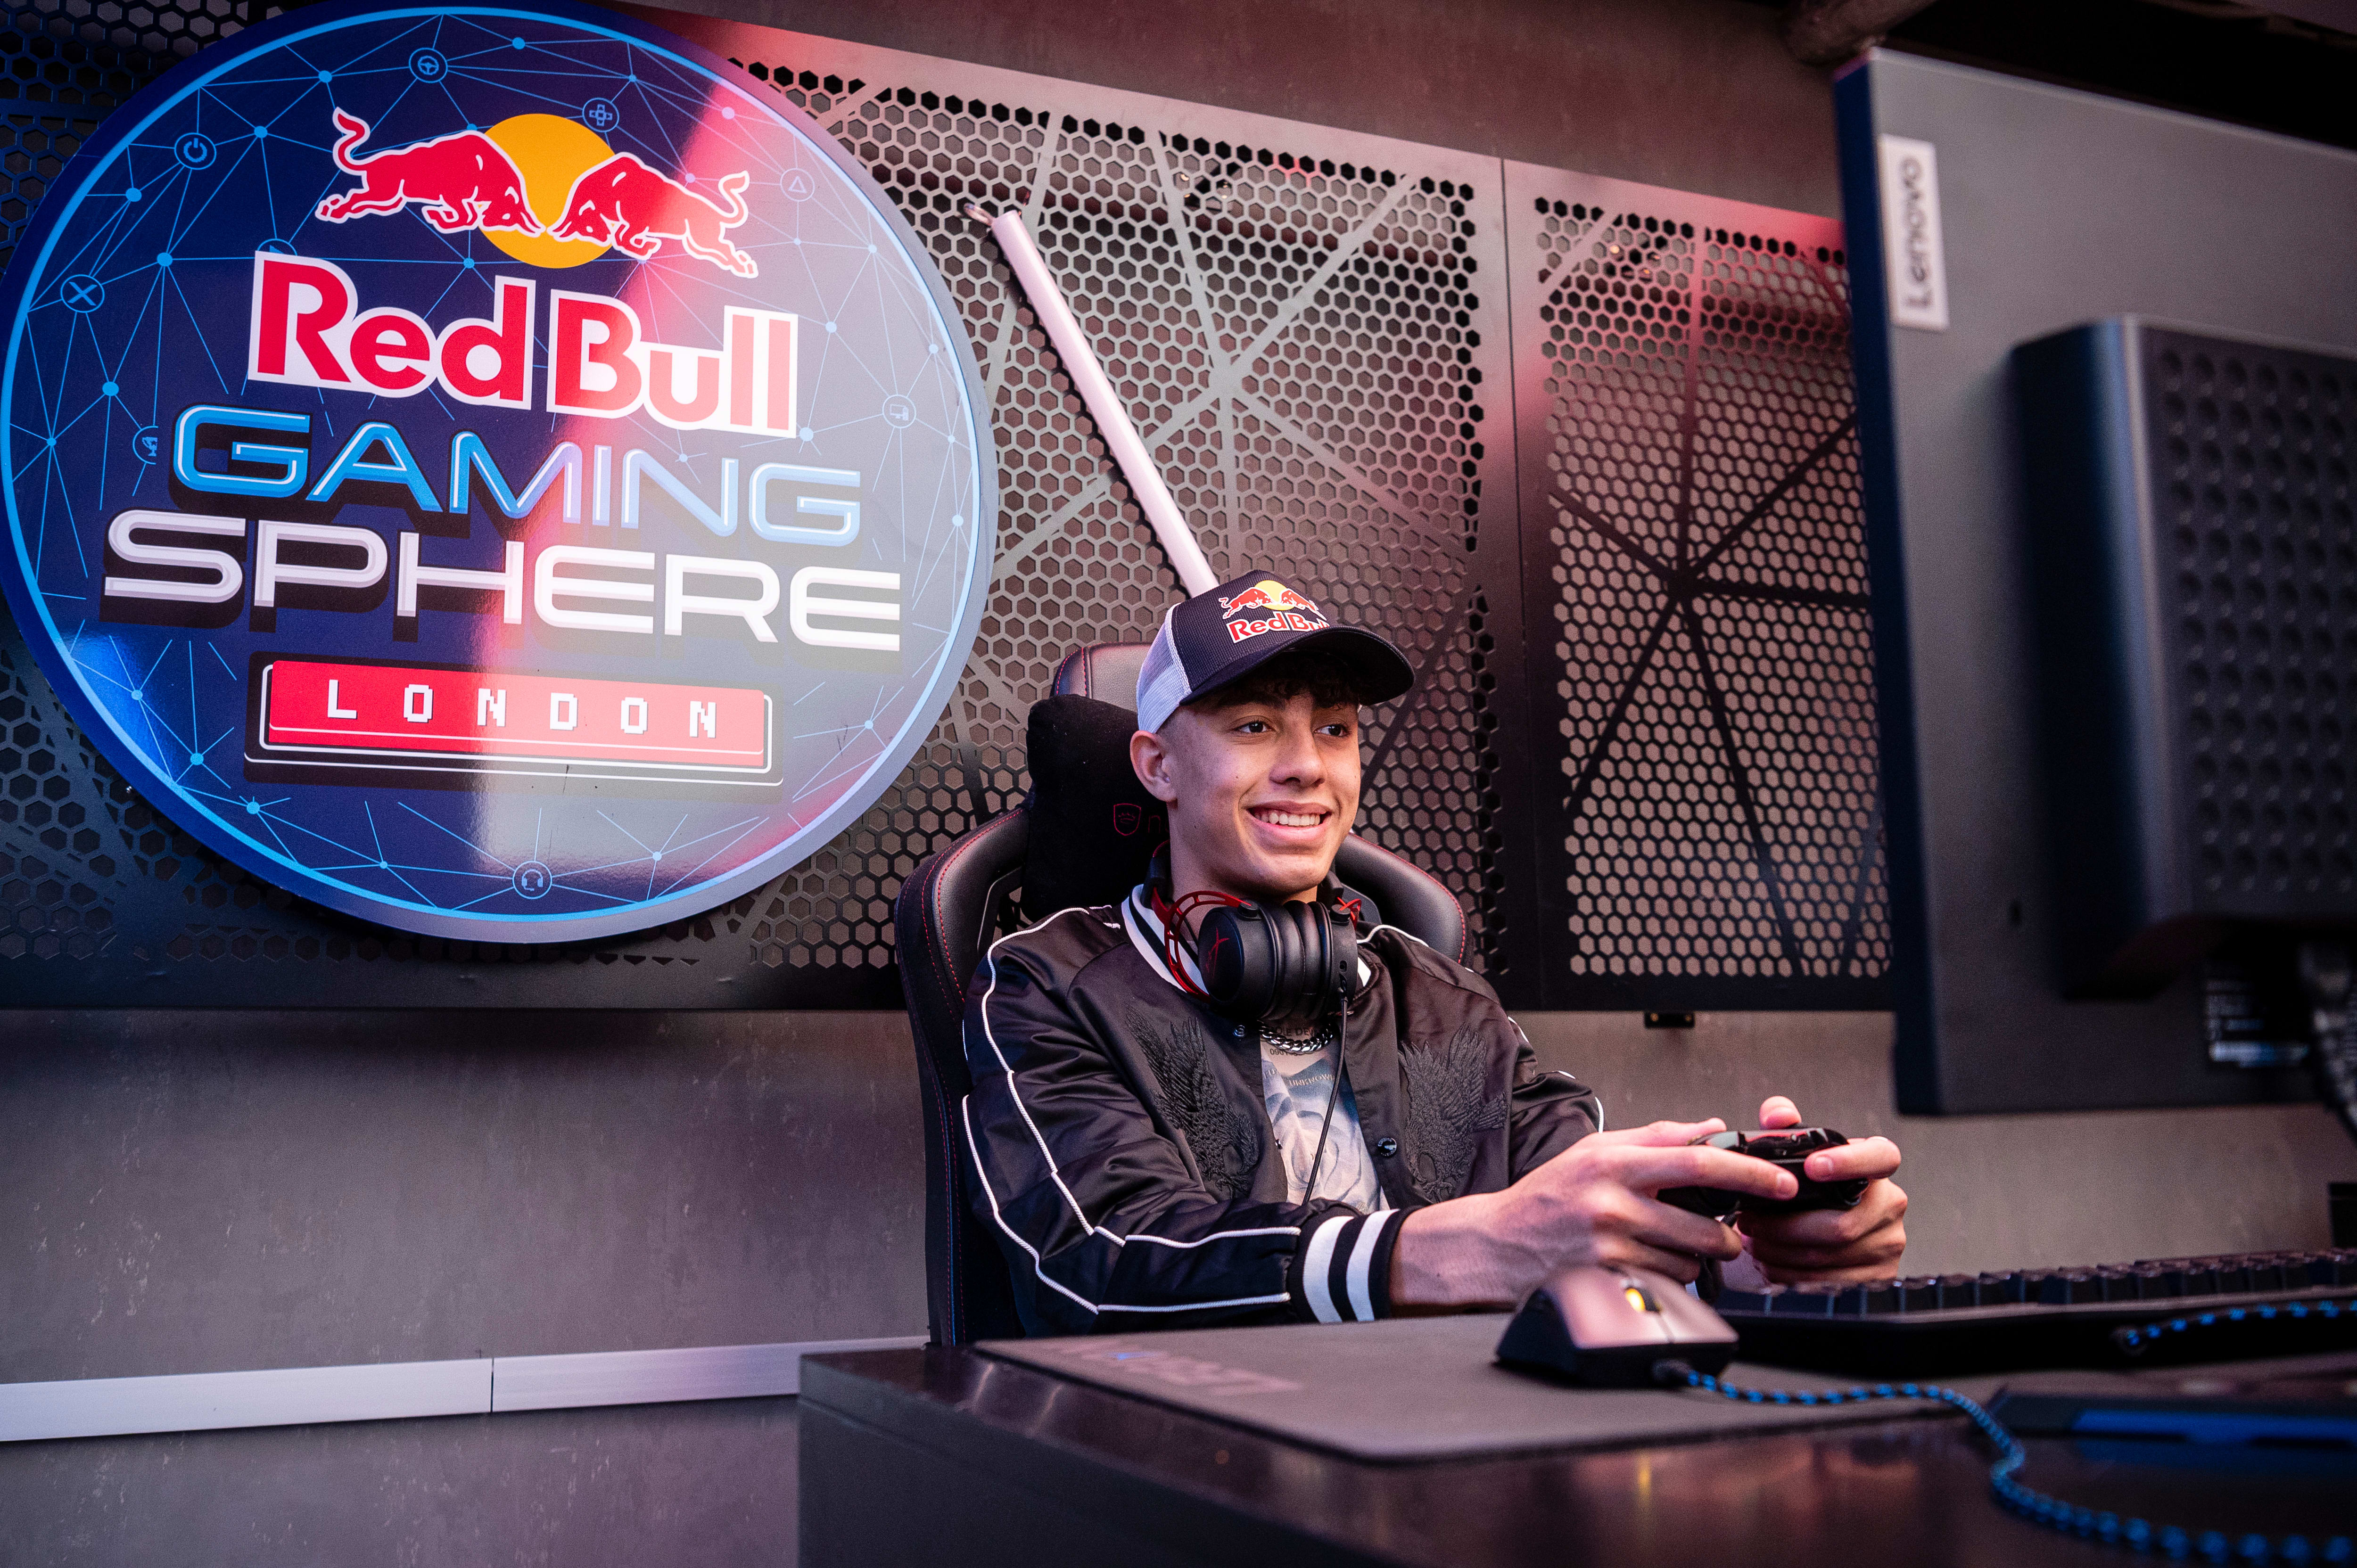 råd strimmel Fabrikant Red Bull Gaming Sphere London: All info here